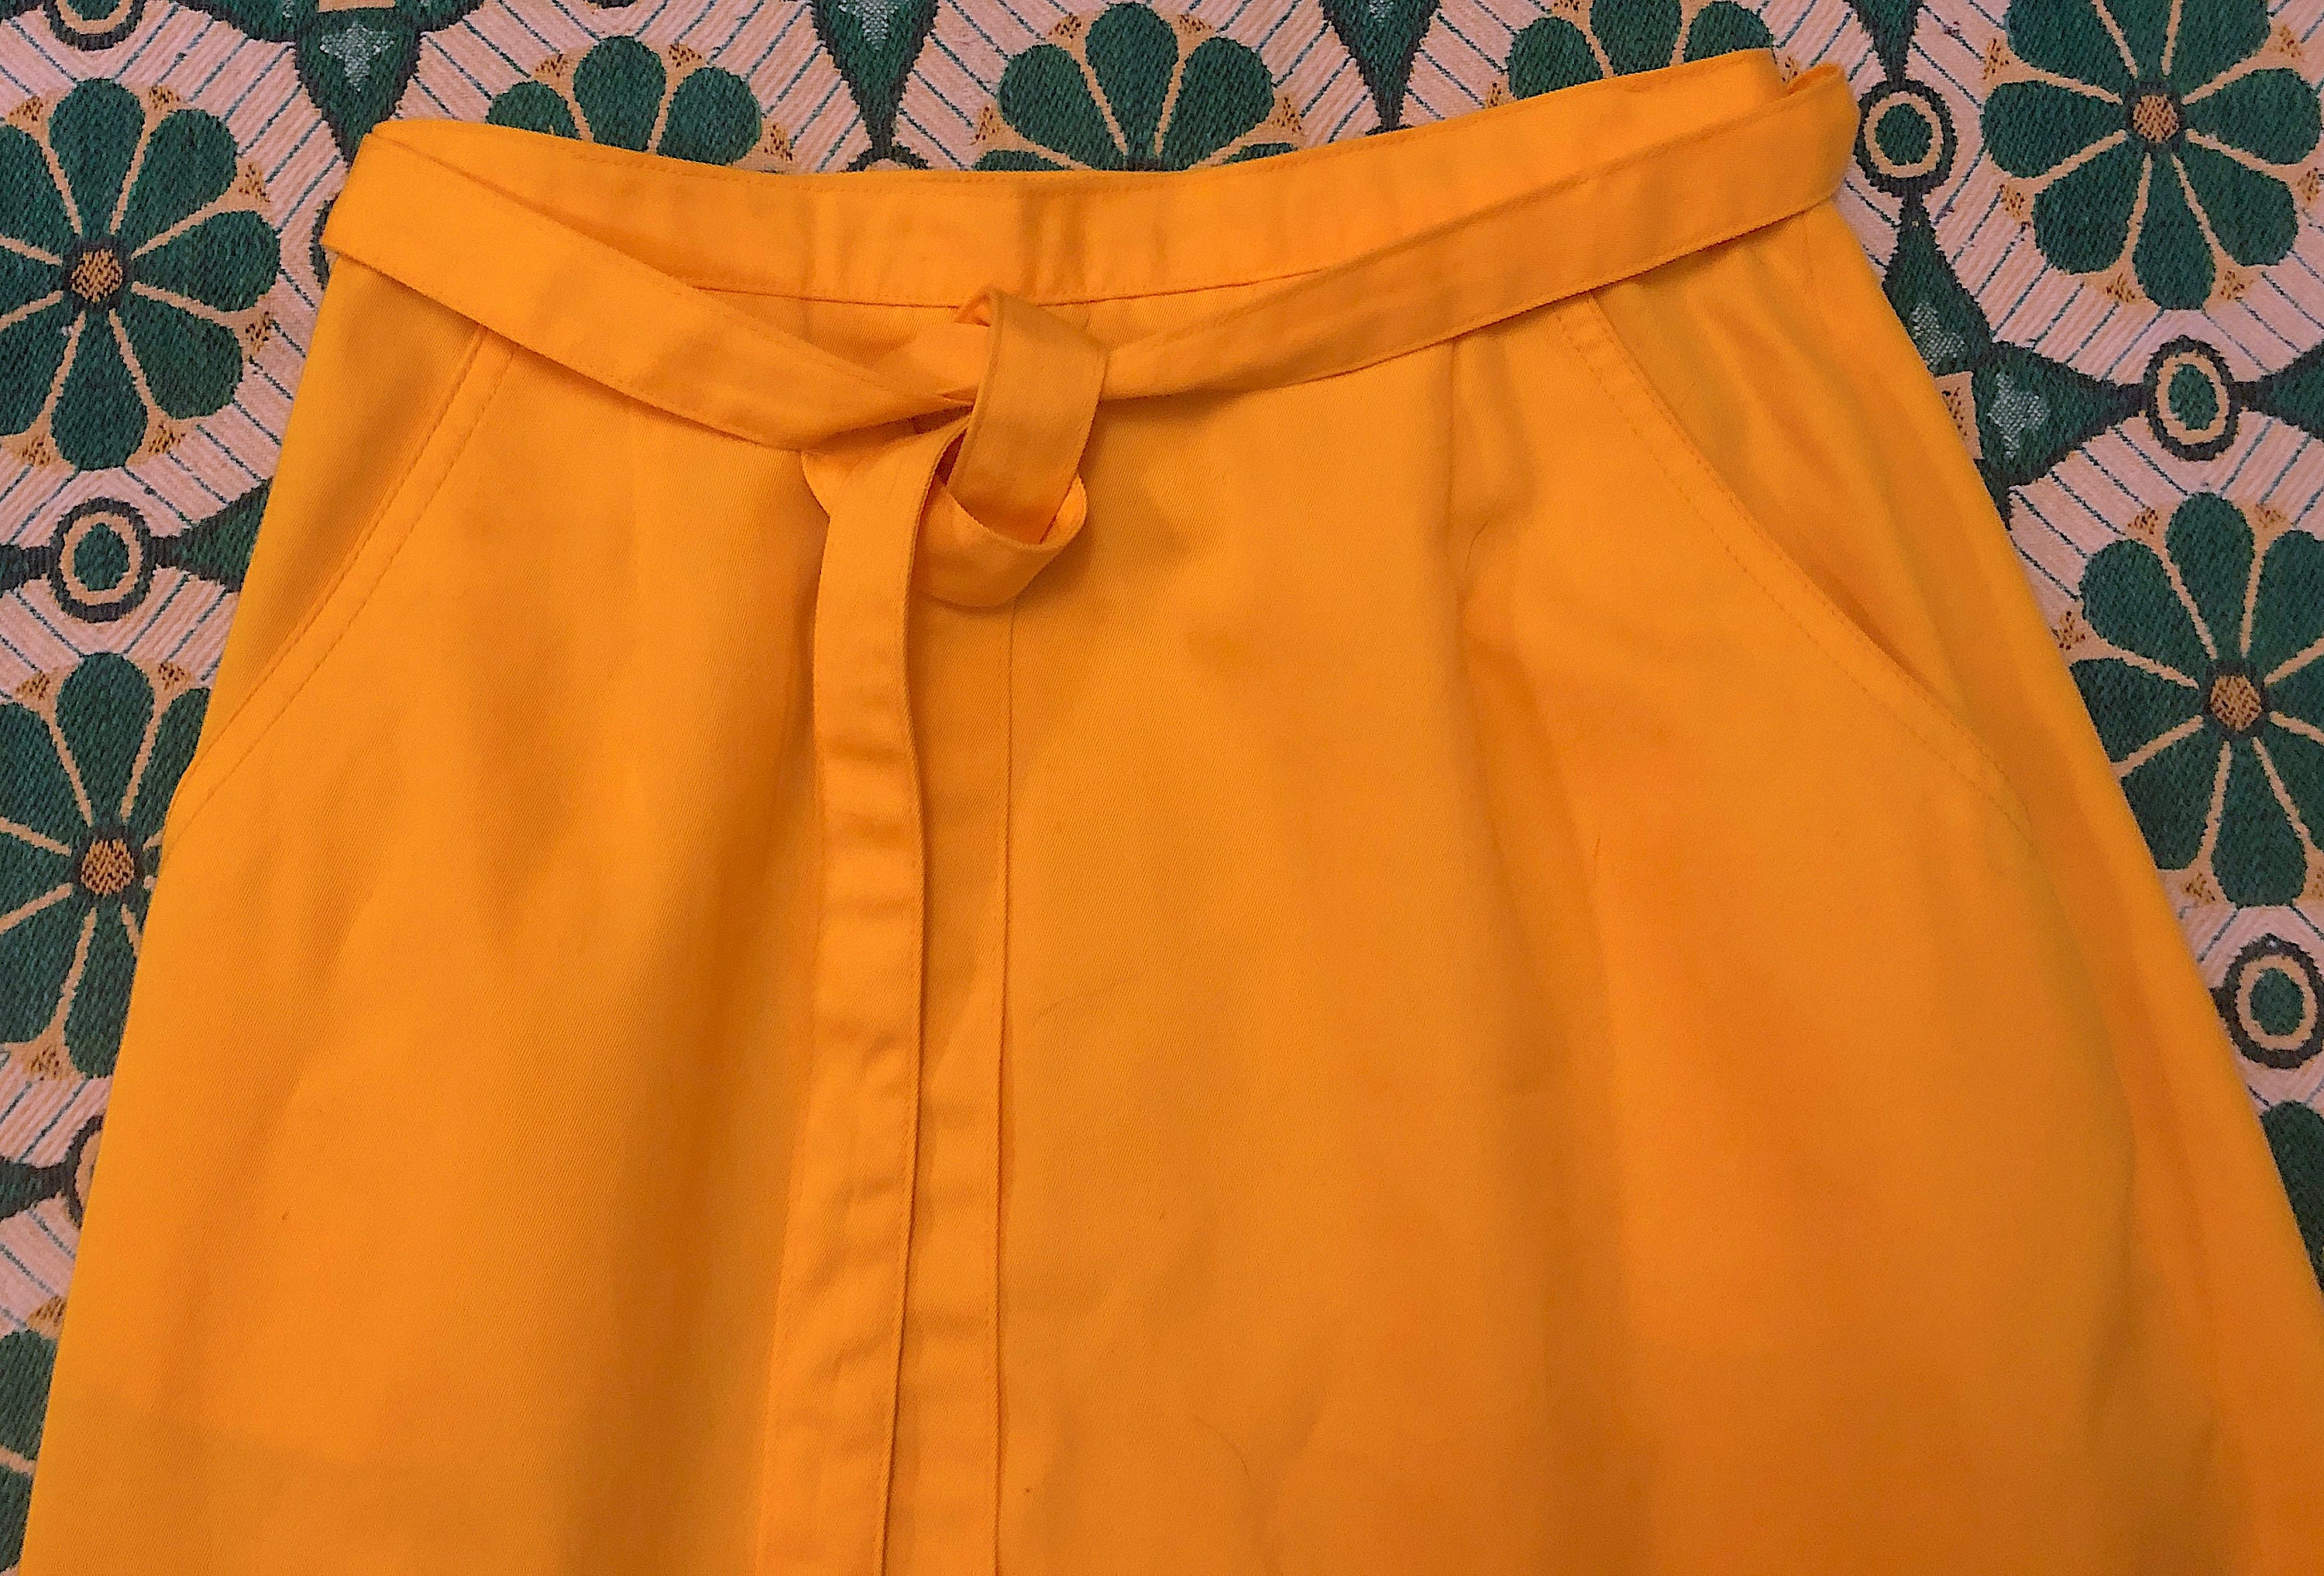 Vintage 1970s 1980s Bright Yellow Cotton Wrap Skirt Boho | Etsy